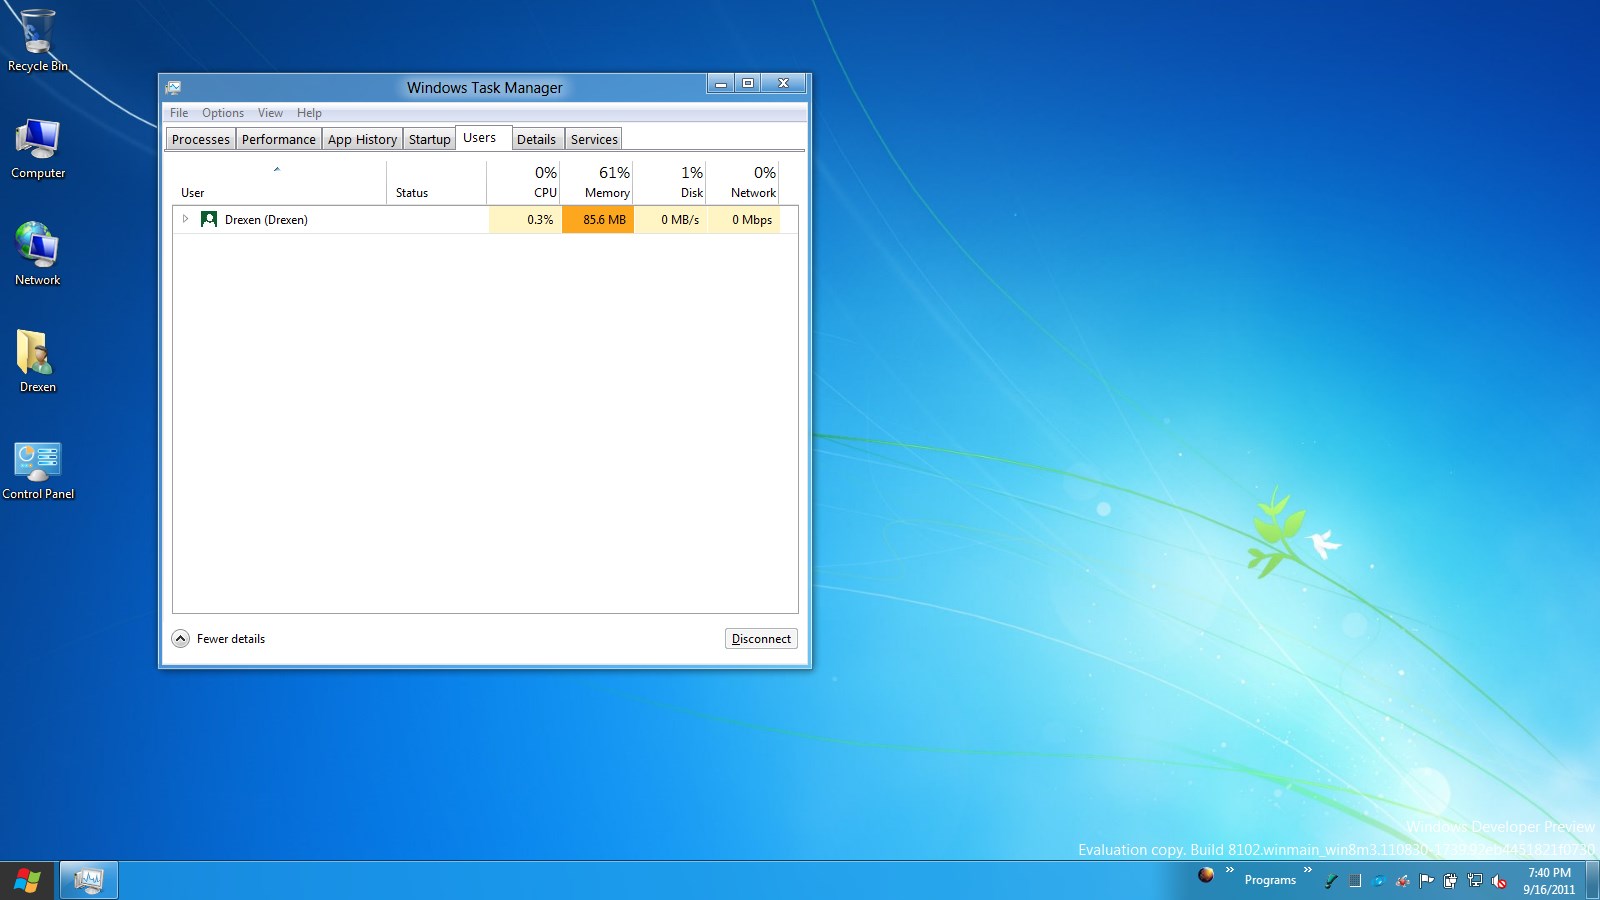 Amd service. Windows task Panel. Windows 8 build 8102. Windows tasks service.